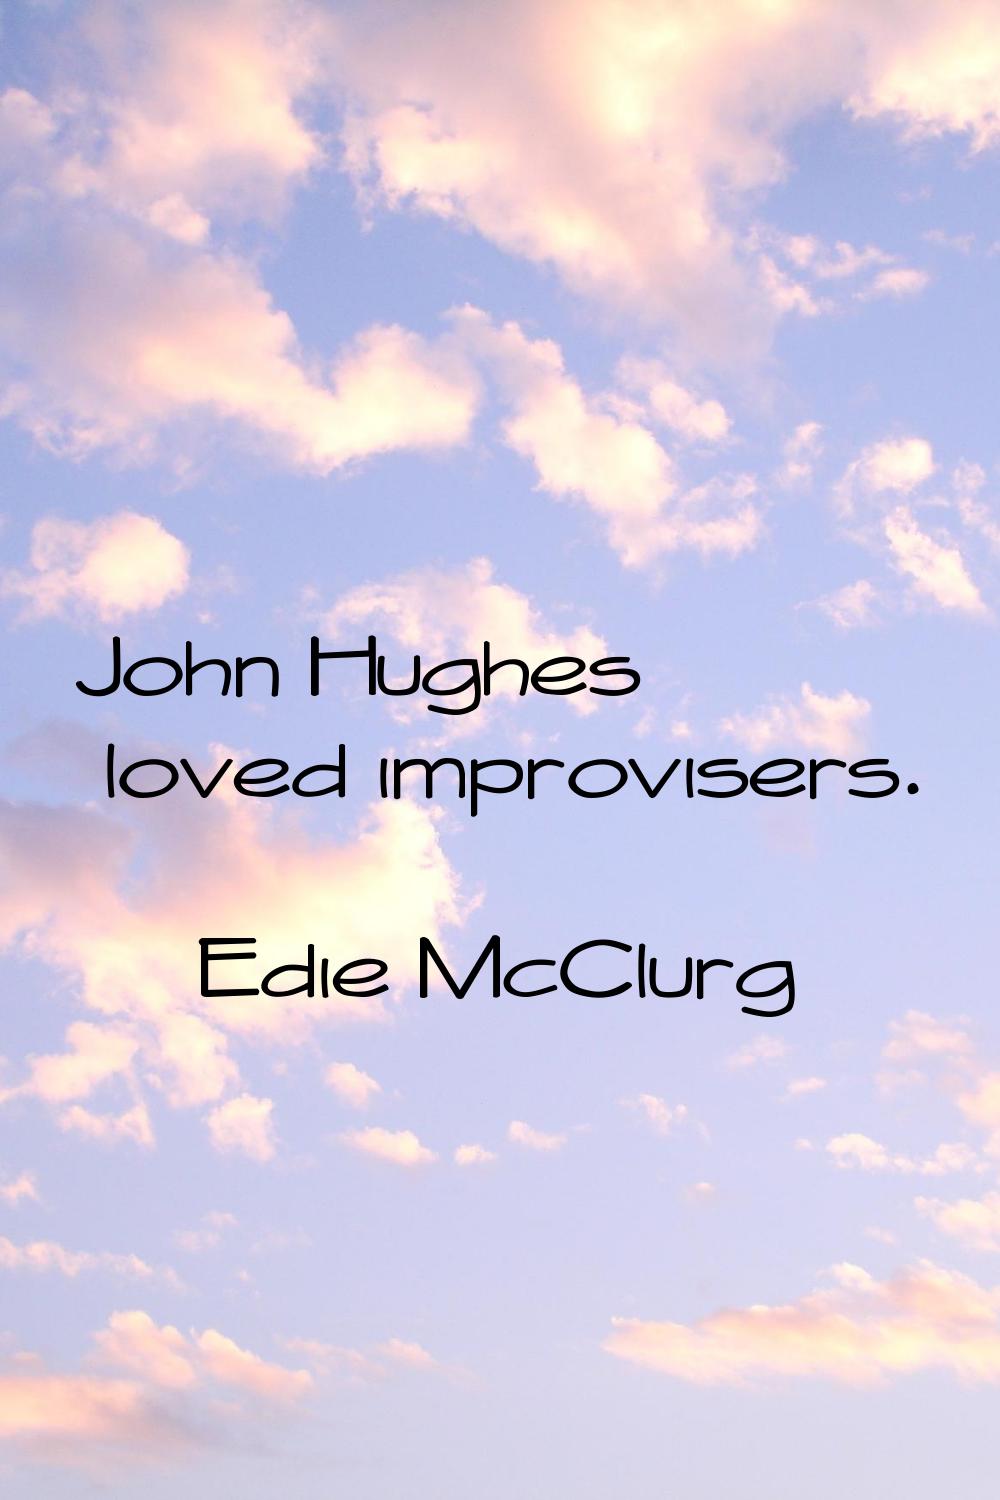 John Hughes loved improvisers.